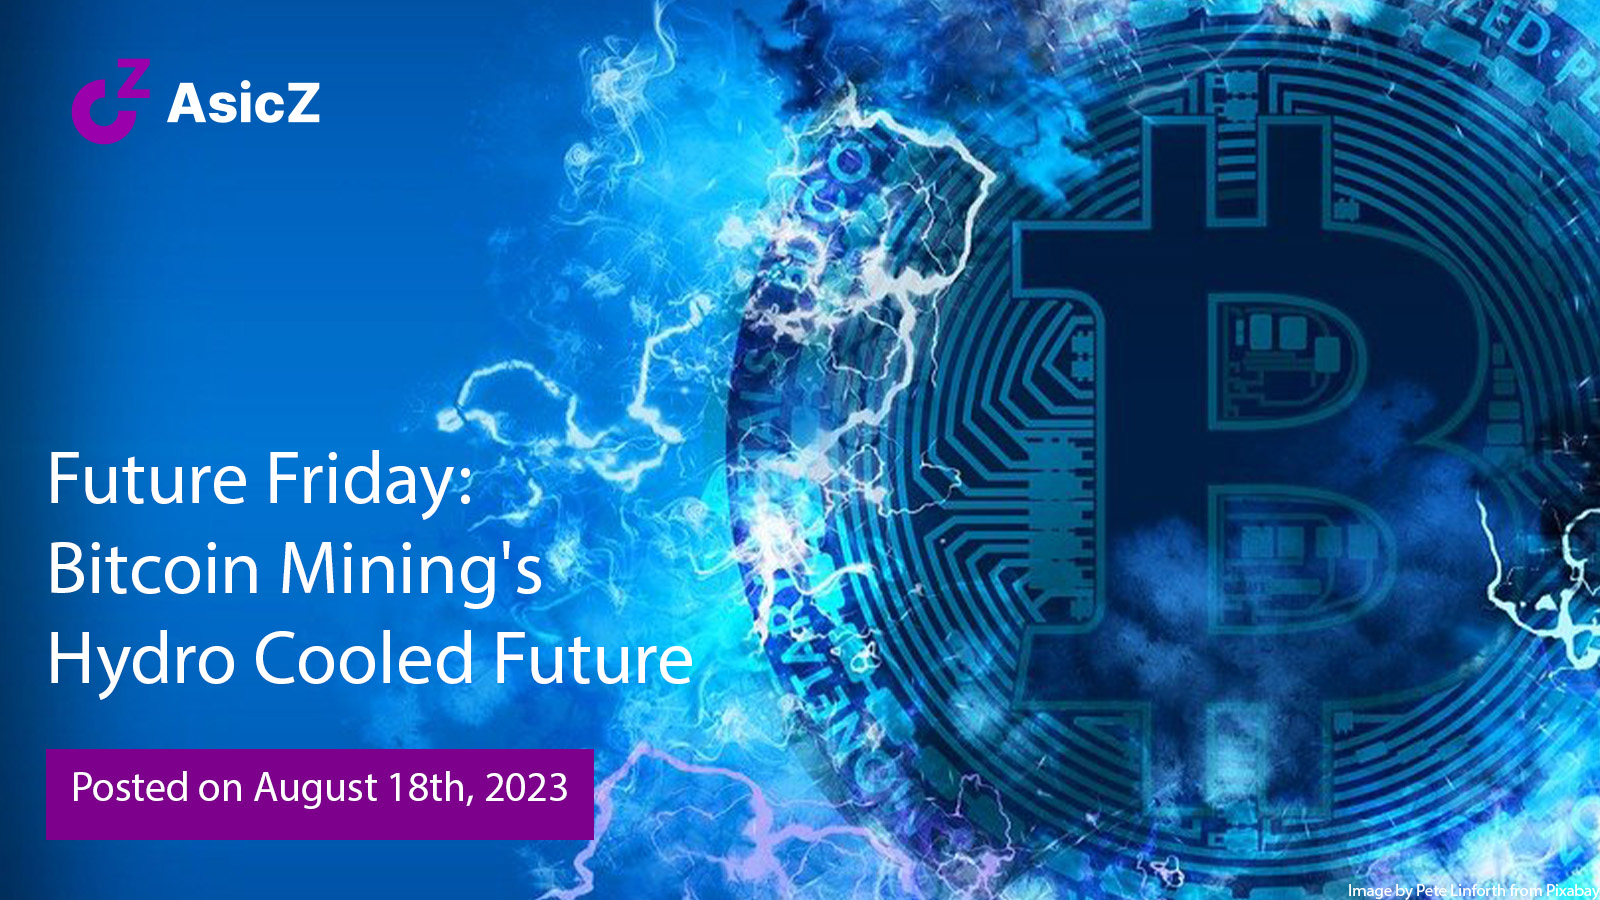 Bitcoin Mining’s Hydro Cooled Future